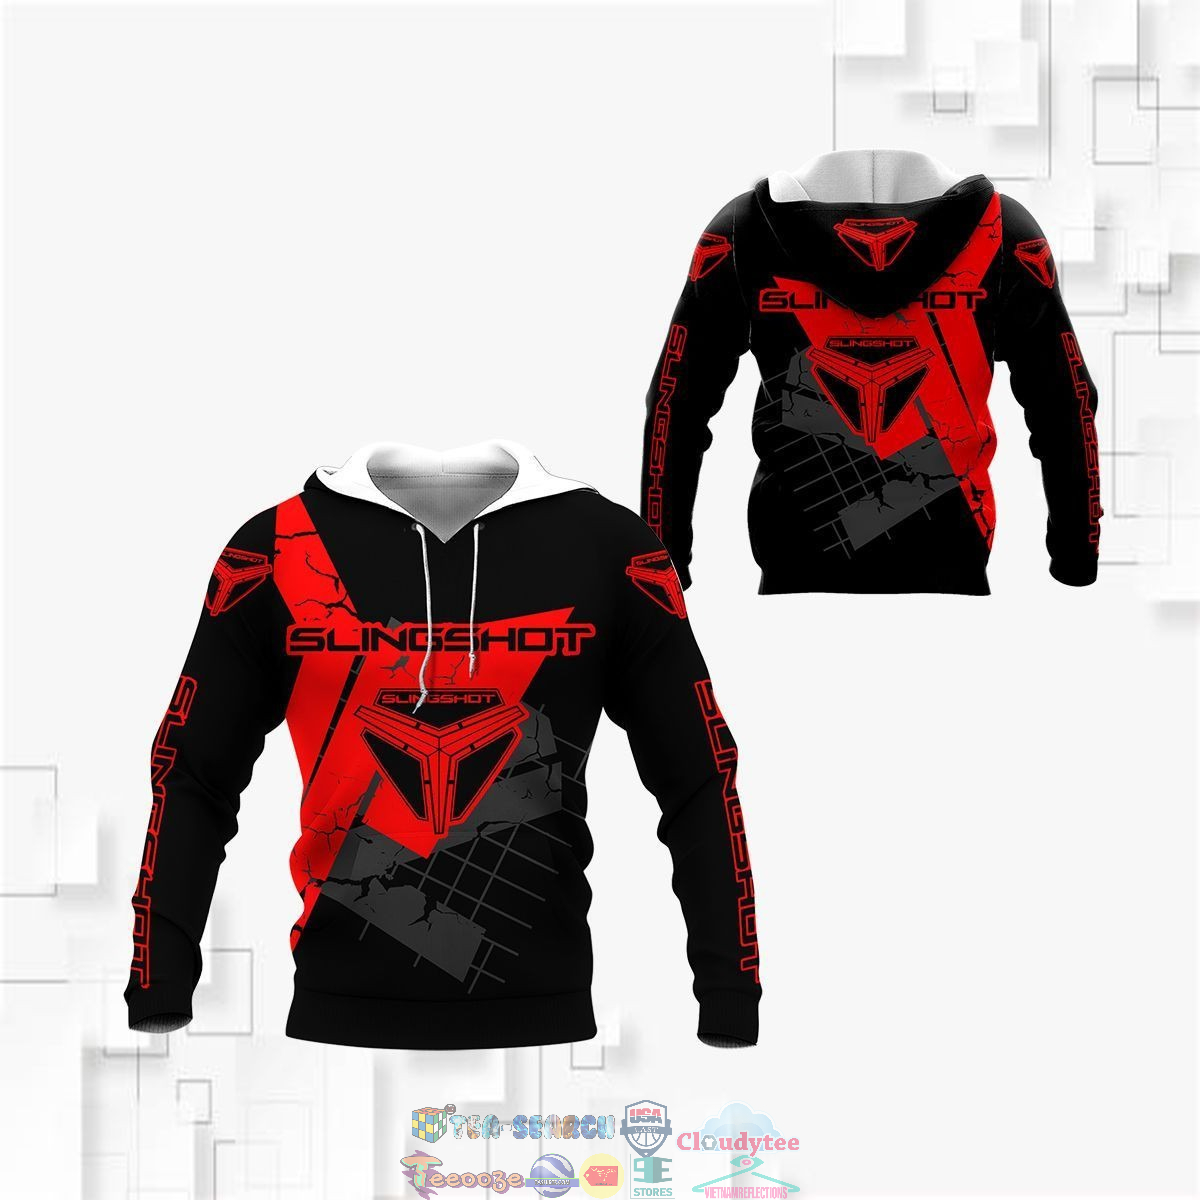 Slingshot ver 3 3D hoodie and t-shirt – Saleoff